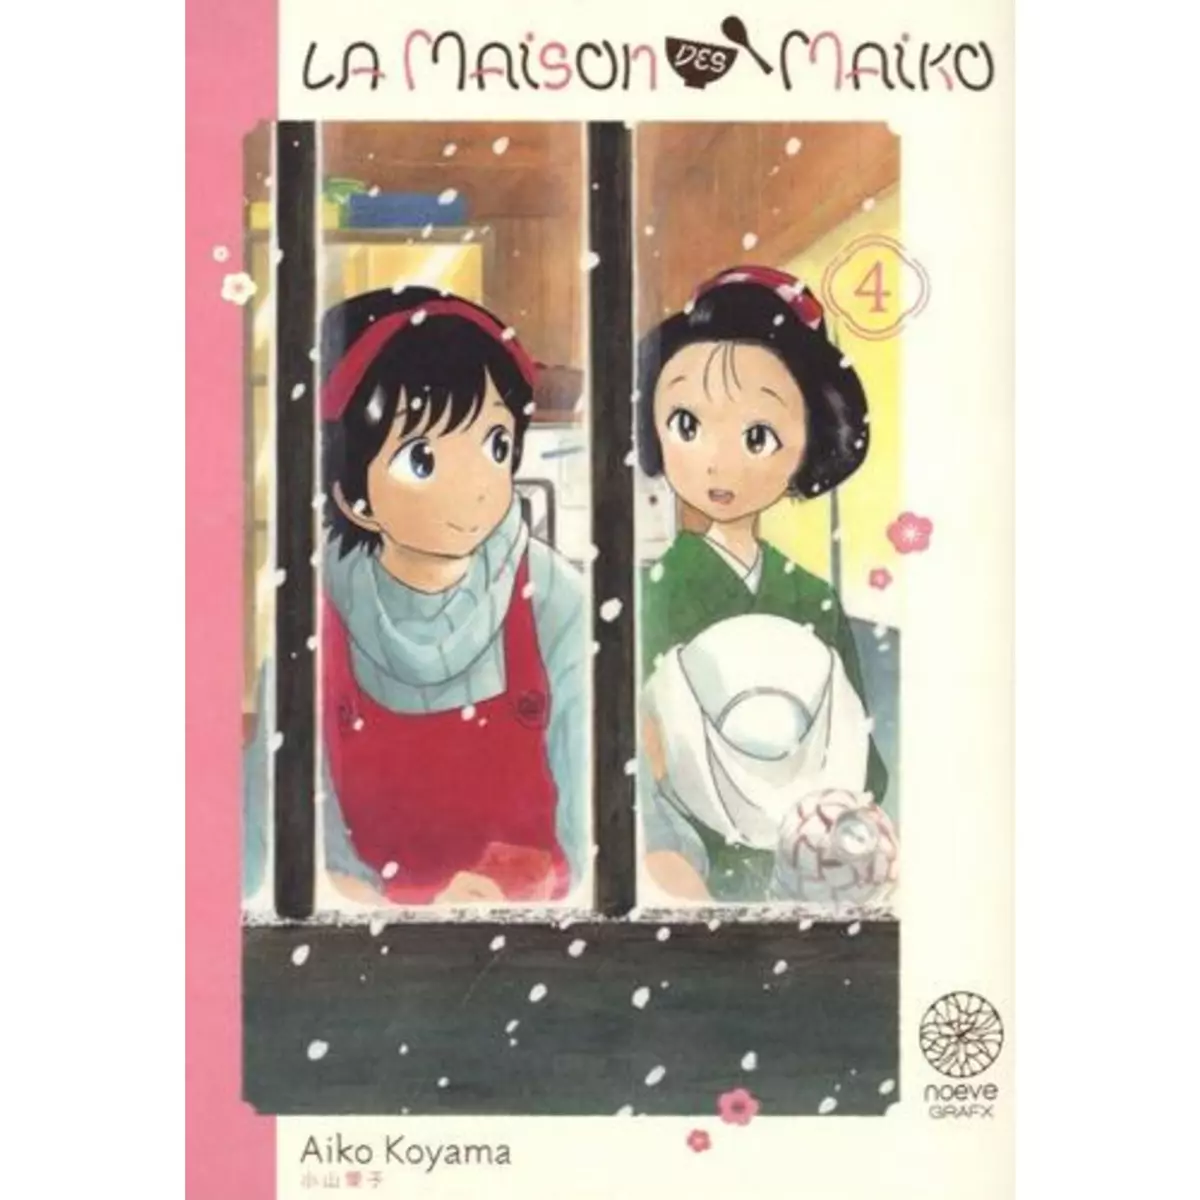  LA MAISON DES MAIKO TOME 4 , Koyama Aiko